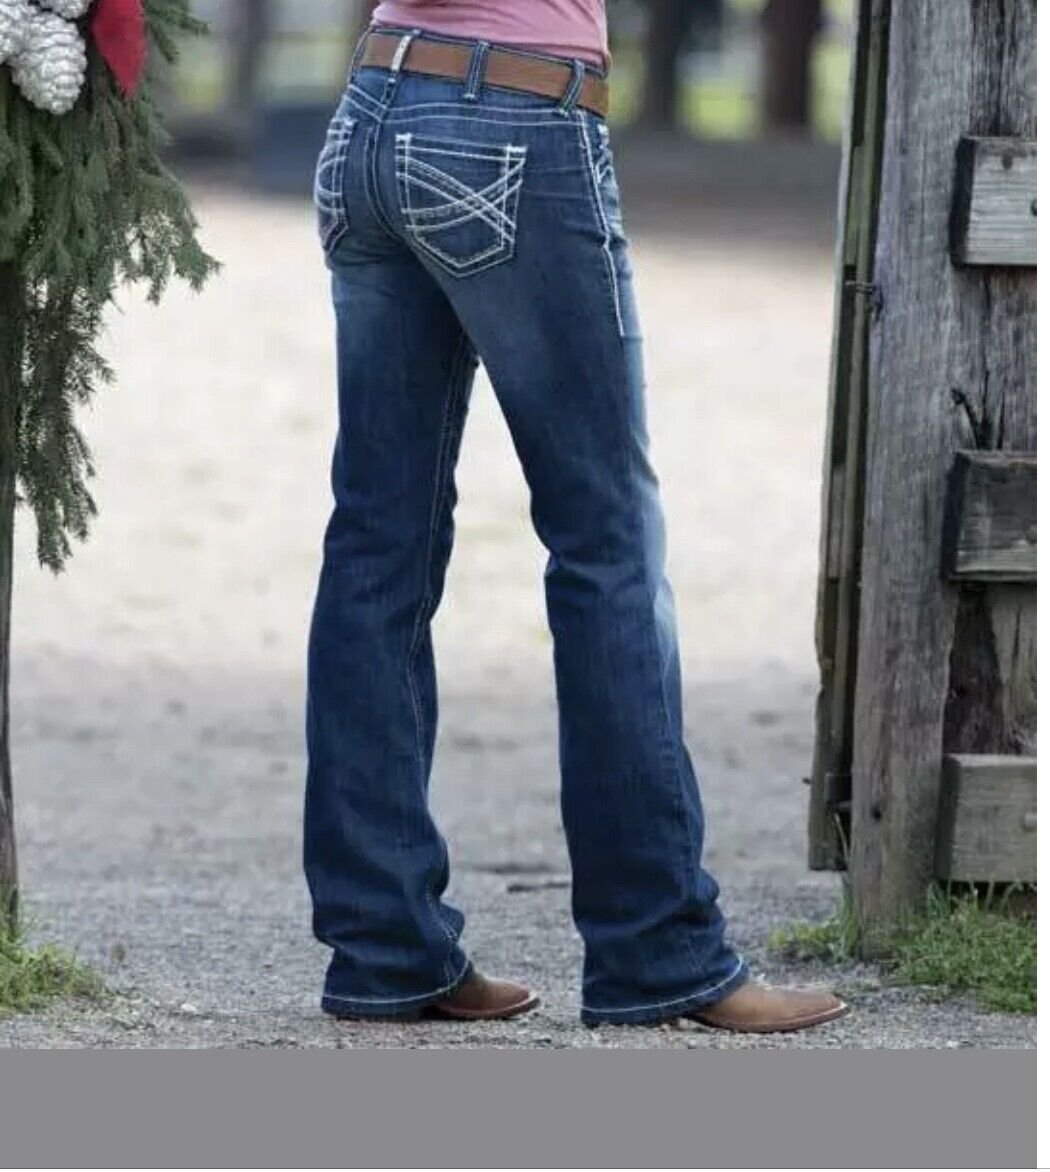 Джинсы ковбоя. Mid Rise Bootcut джинсы. Ковбойские джинсы женские. Джинсы в ковбойском стиле. Женские джинсы в ковбойском стиле.